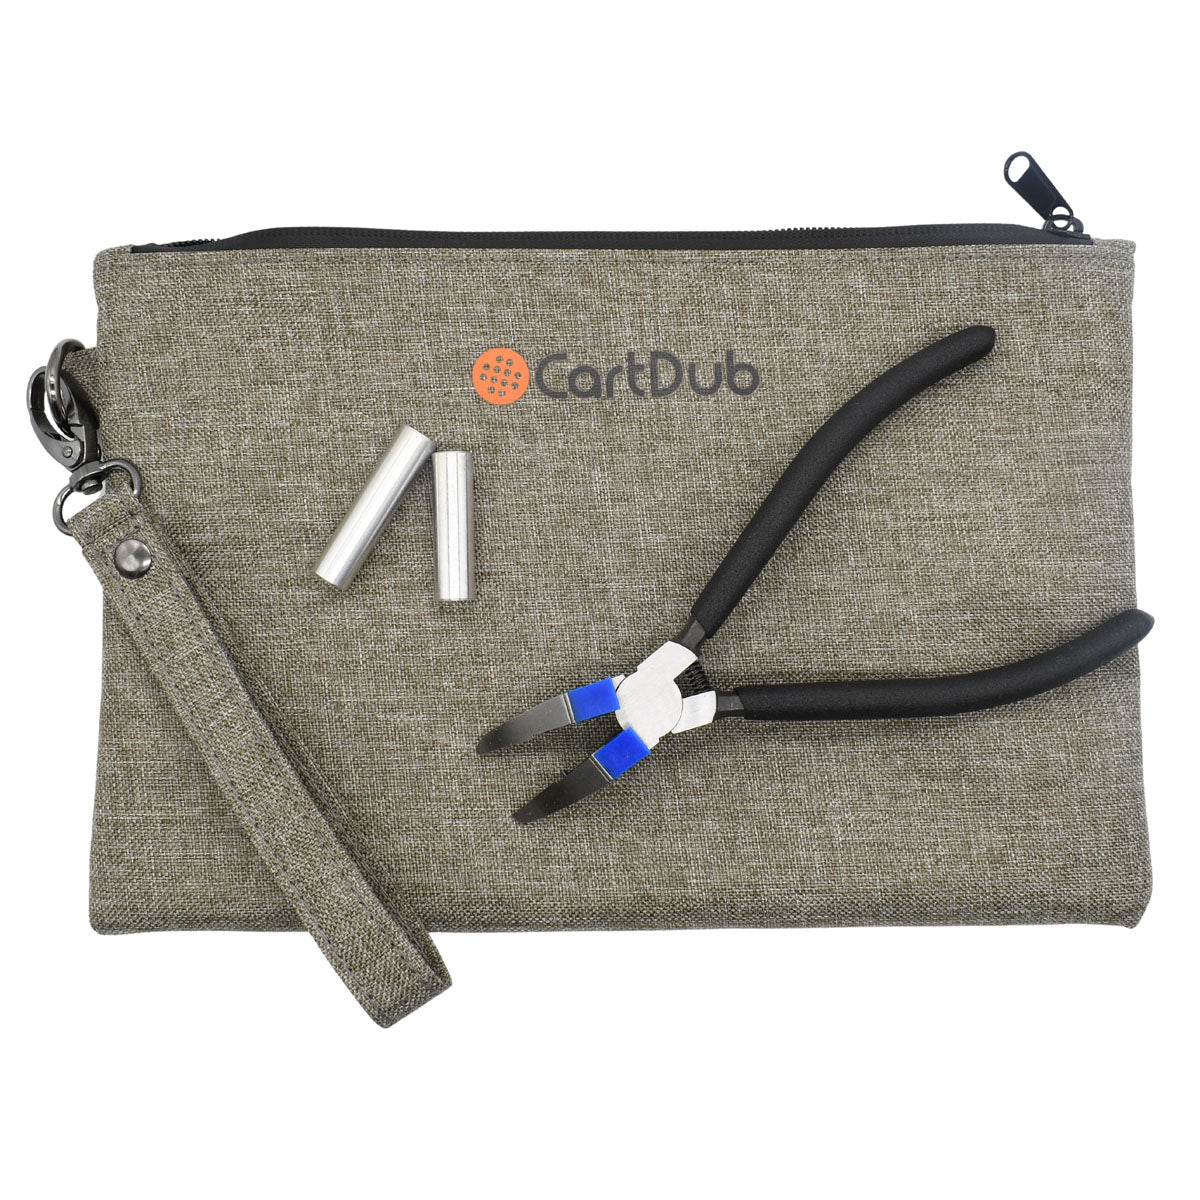 CartDub Vape Cartridge Opener Kit